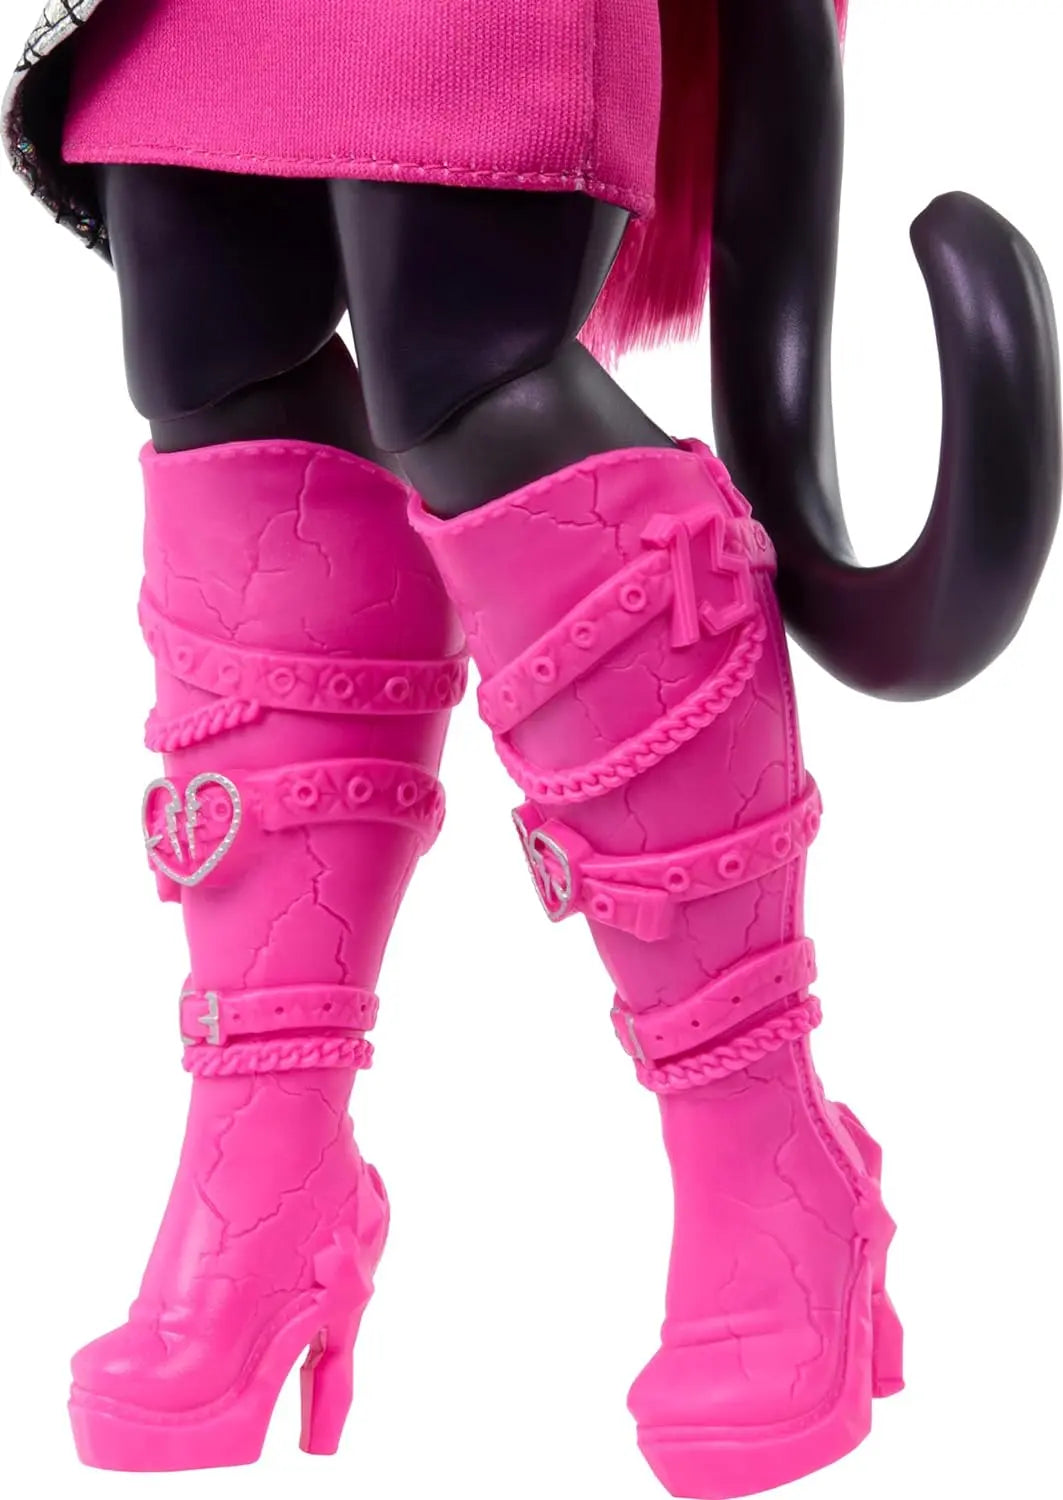 Monster High Catty Noir Doll Monster High